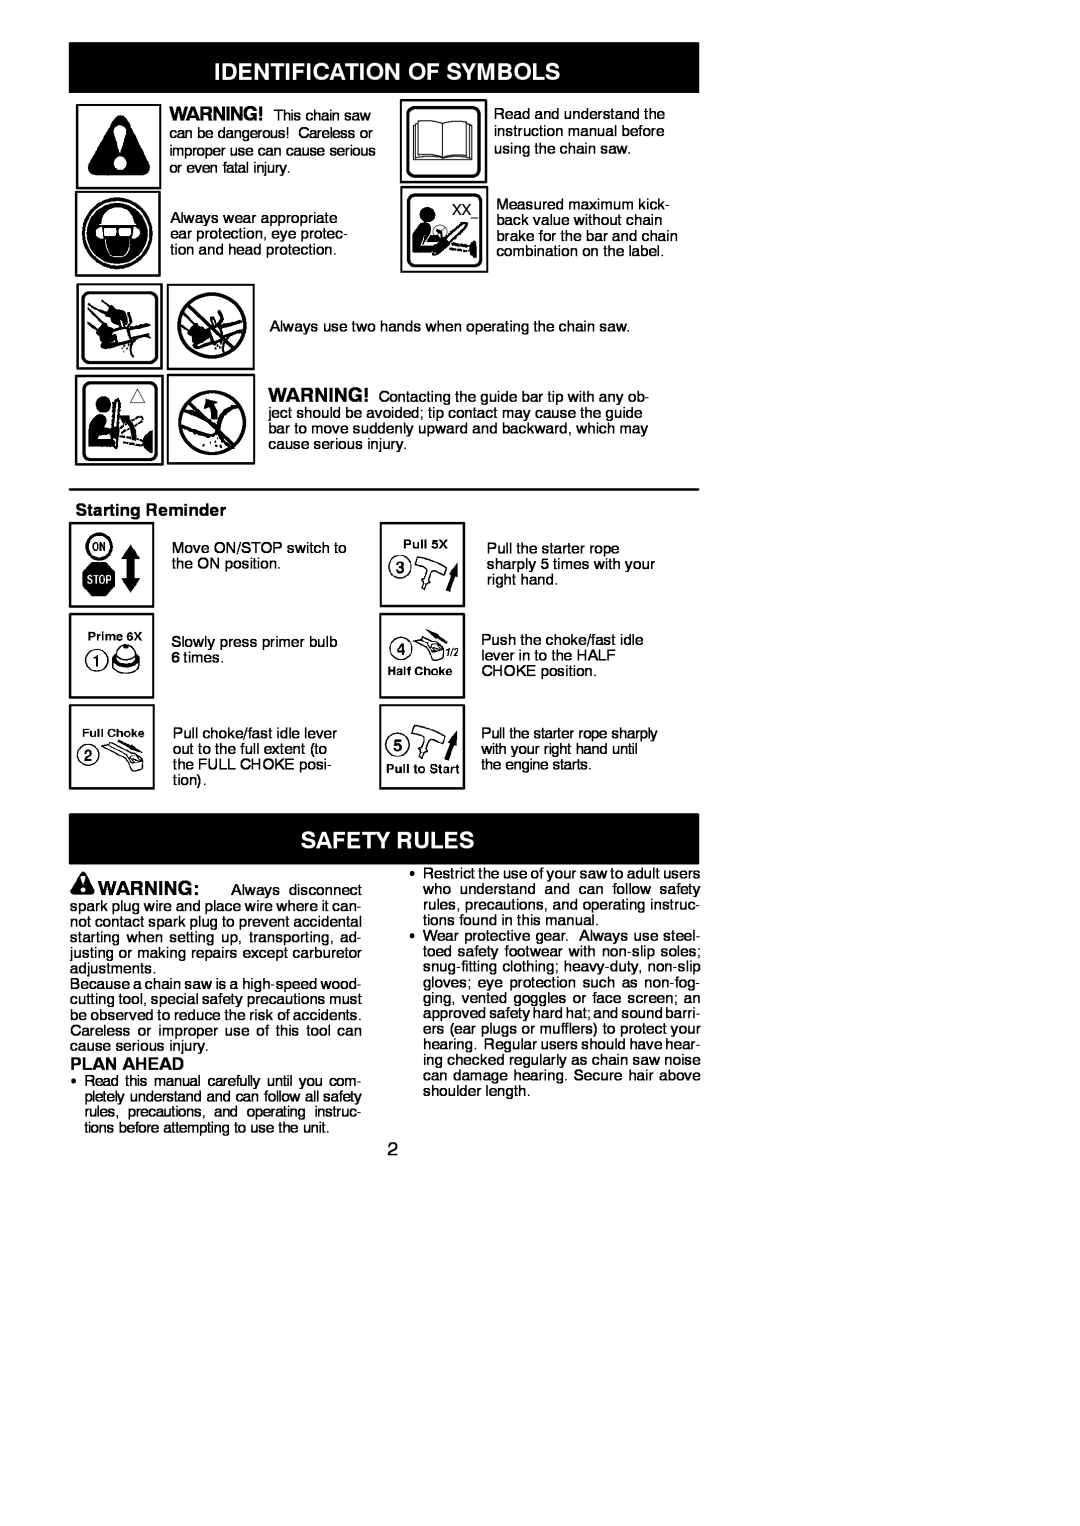 Poulan SM4218 AV instruction manual Identification Of Symbols, Safety Rules, Starting Reminder, Plan Ahead 